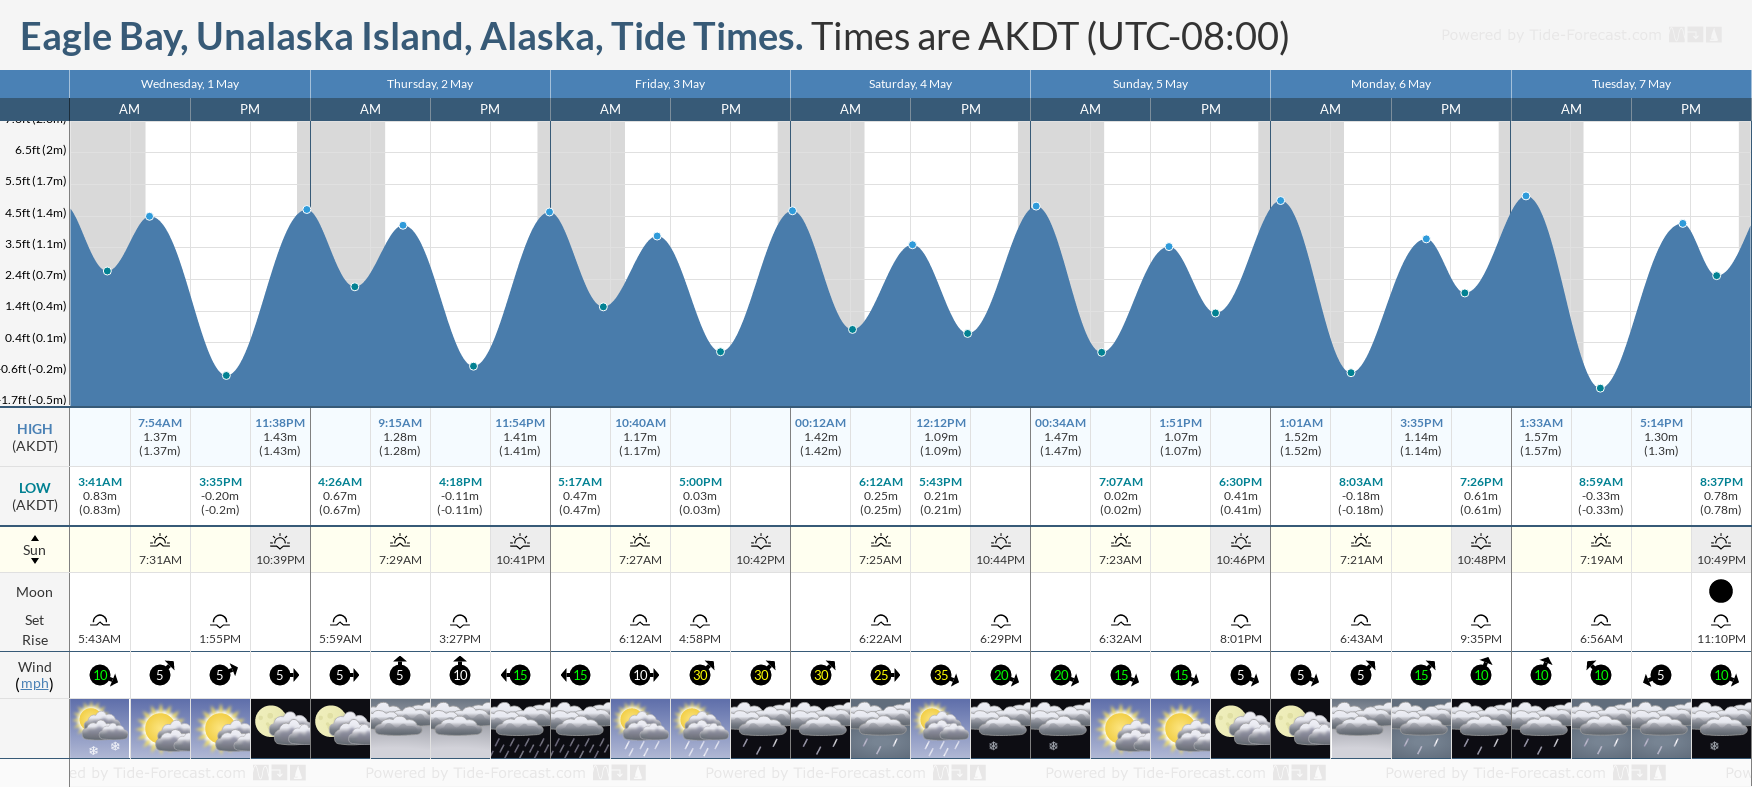 Eagle Bay, Unalaska Island, Alaska Tide Chart including high and low tide tide times for the next 7 days